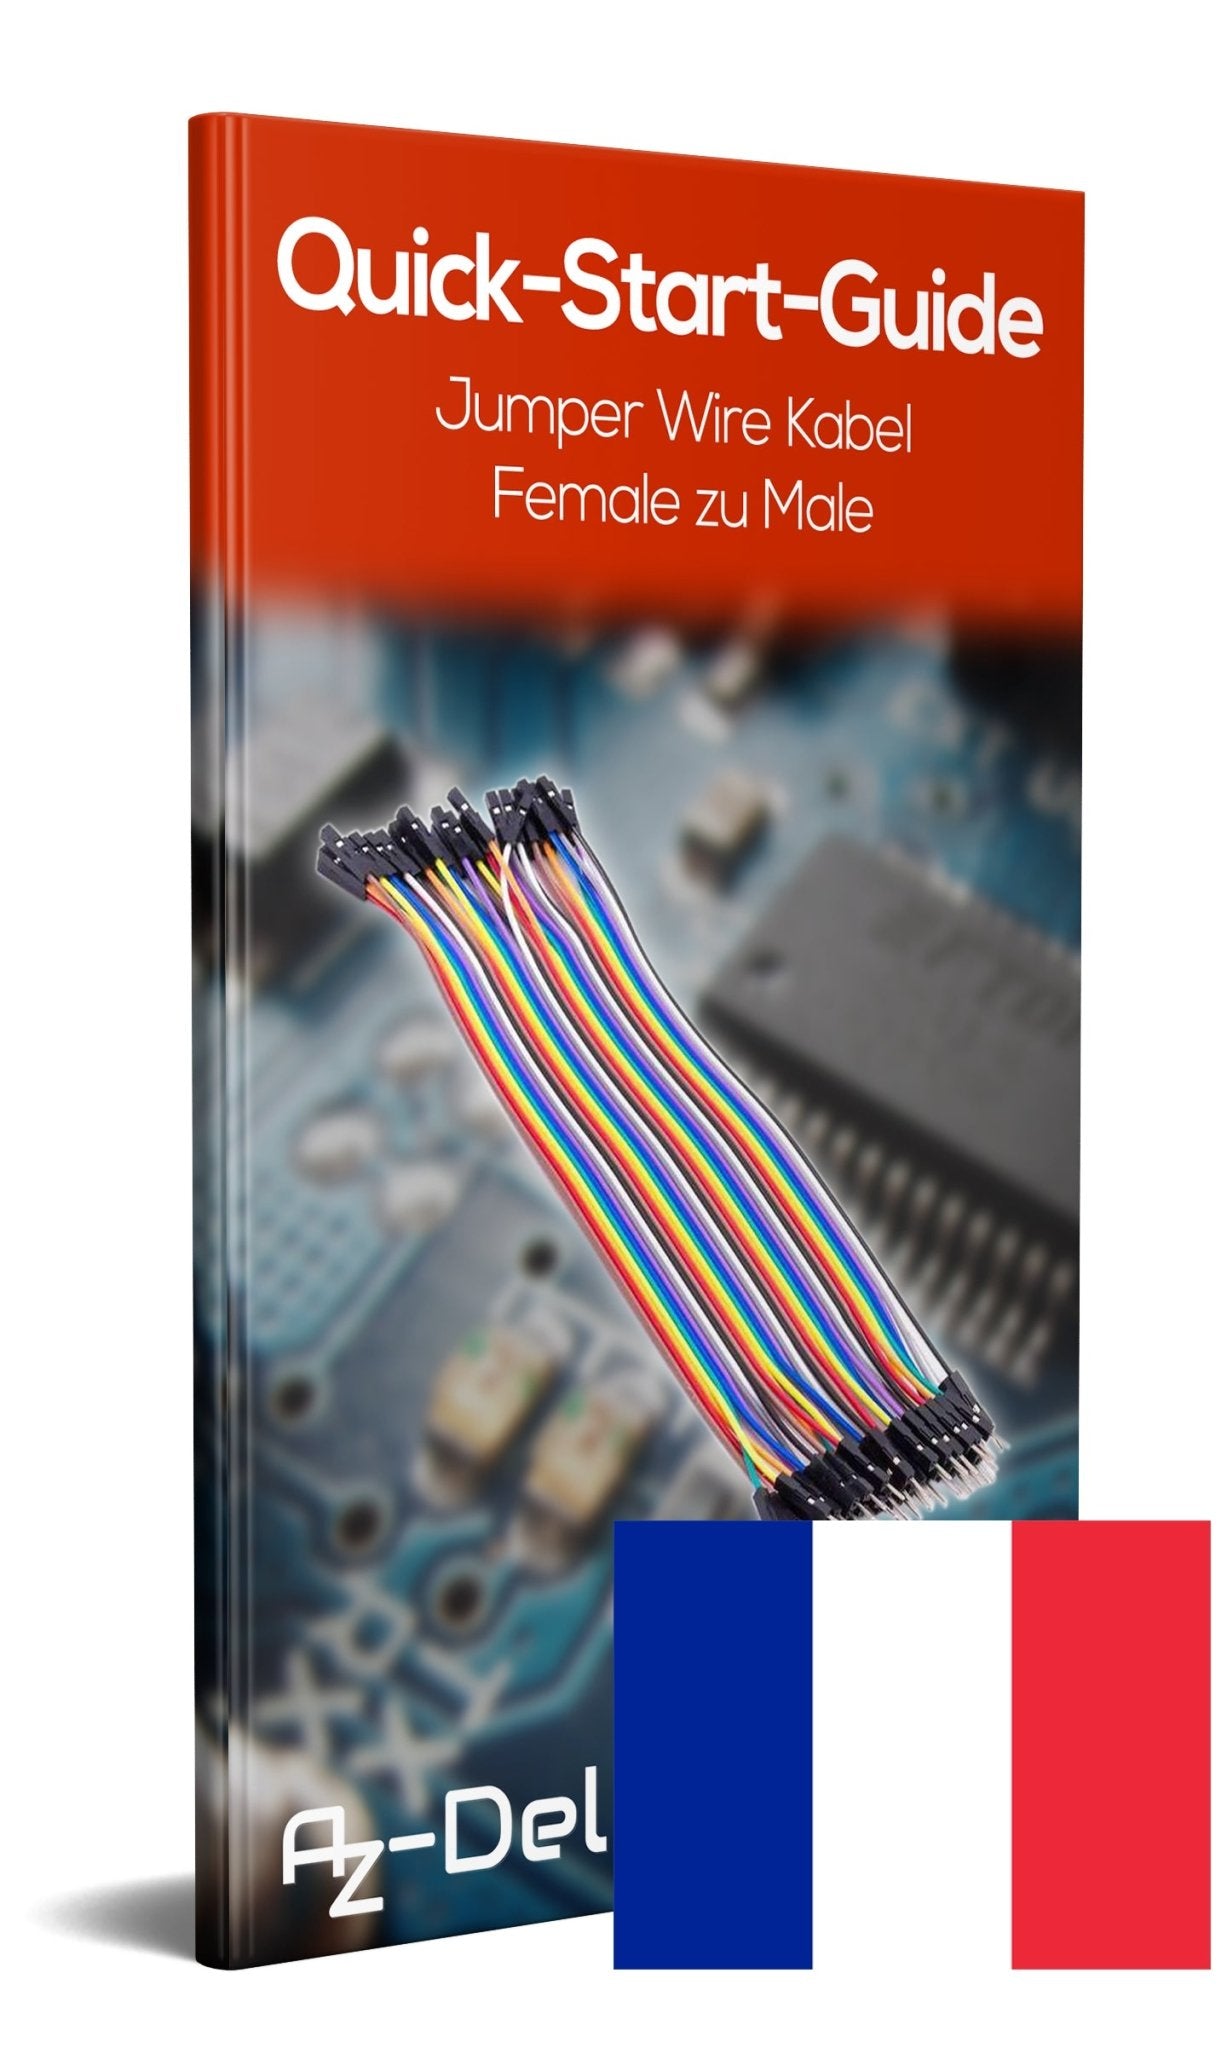 Jumper Wire Kabel 40 STK. je 20 cm F2M Female to Male für Raspberry Pi Breadboard - AZ-Delivery